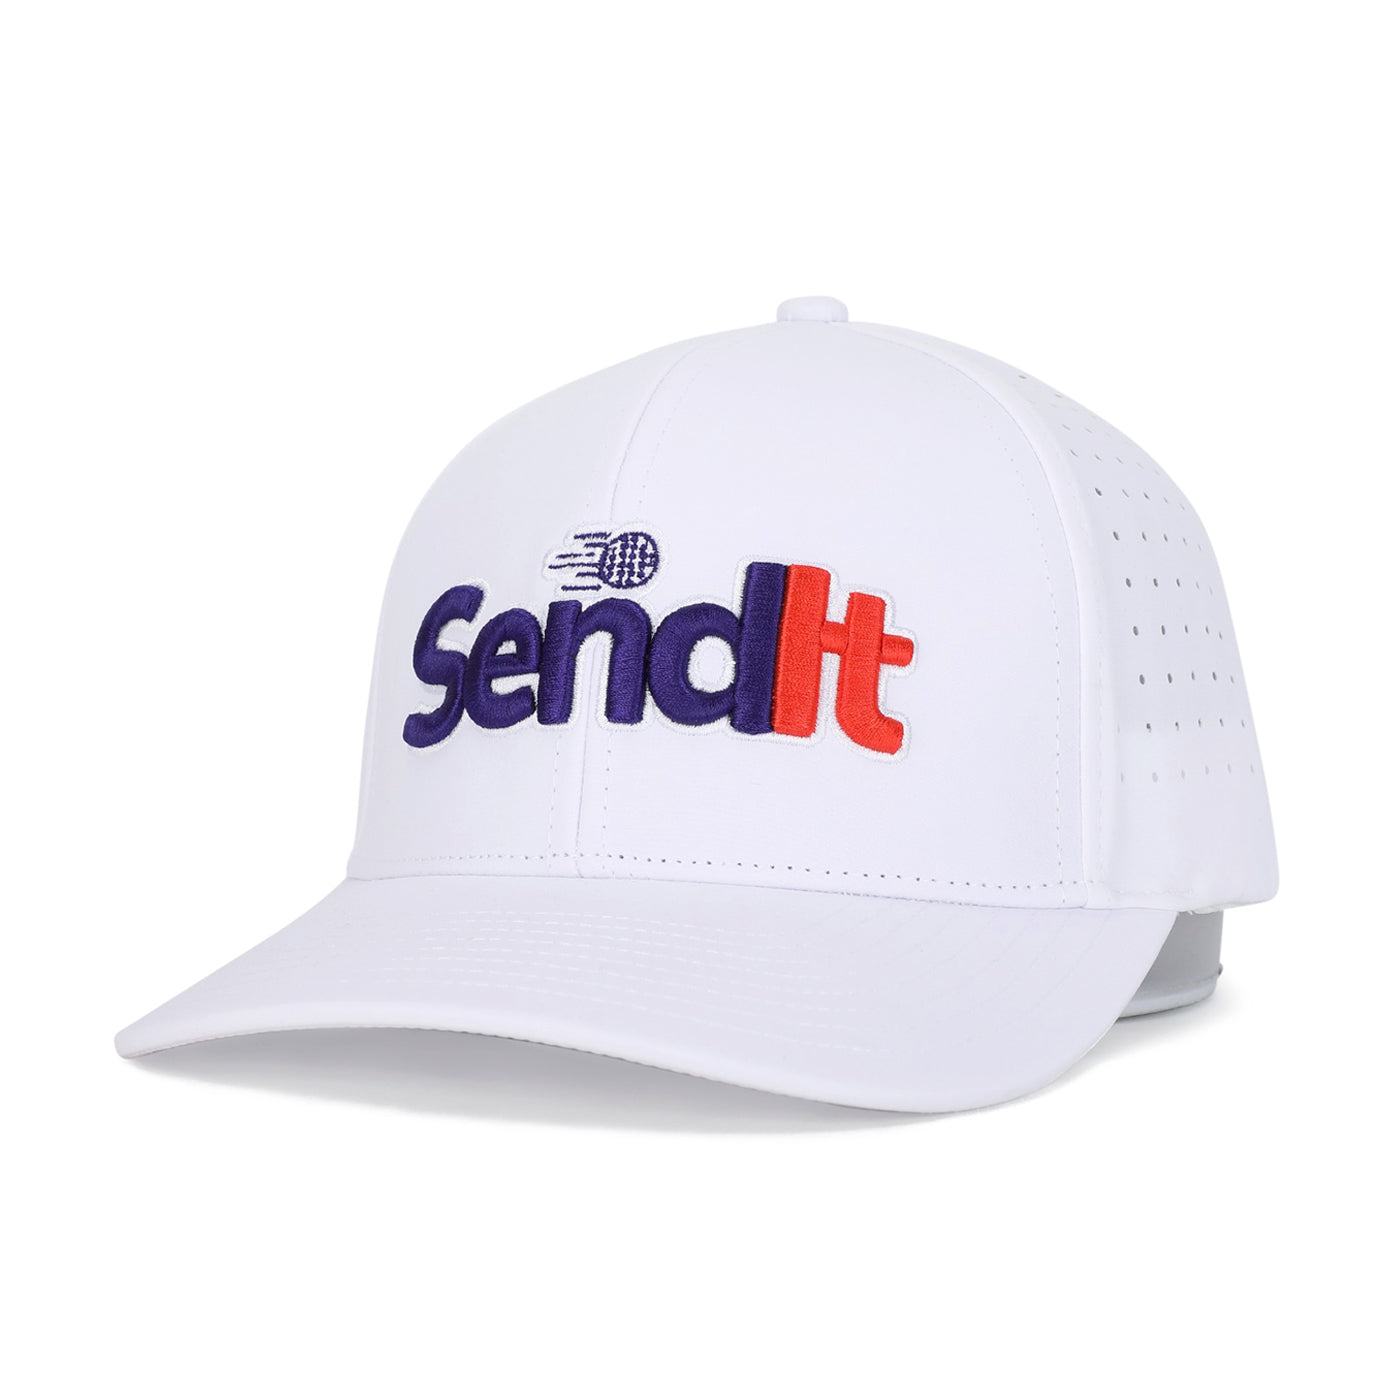 Send It - Performance Golf Hat - Stretch Fit